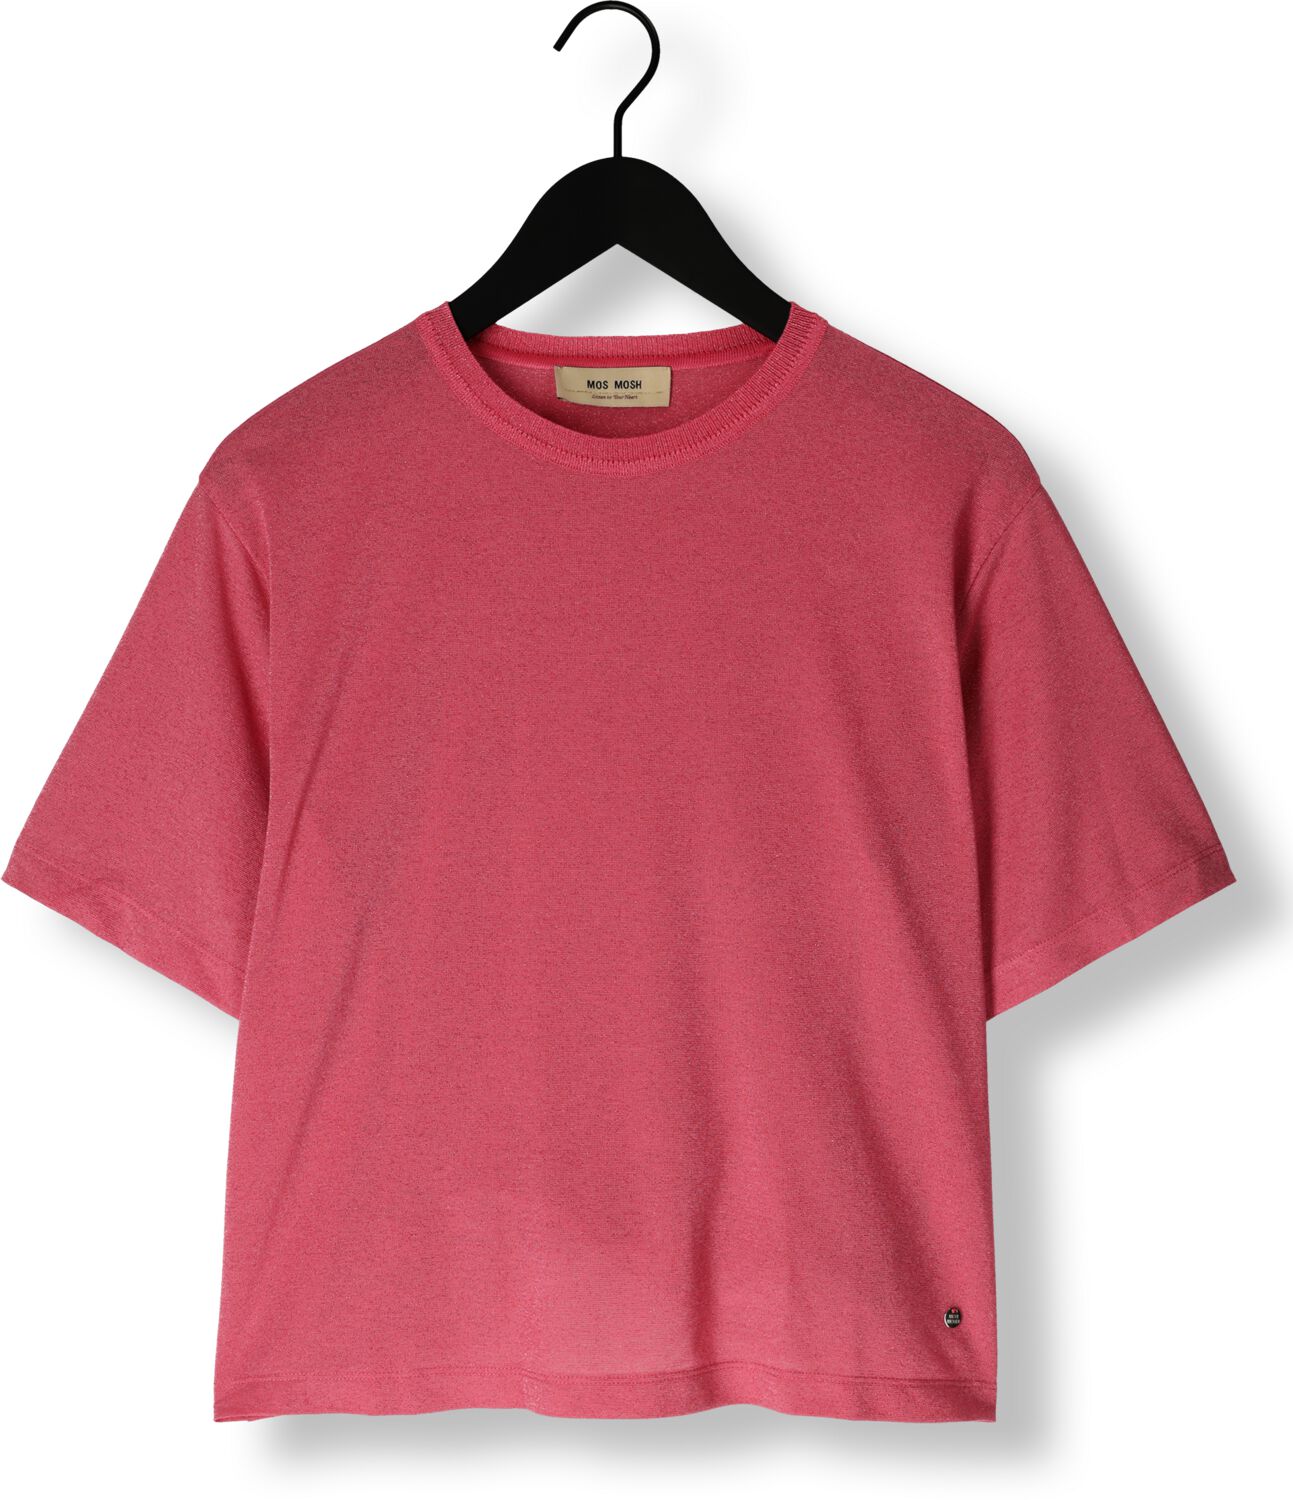 MOS MOSH Dames Tops & T-shirts Kit Roze